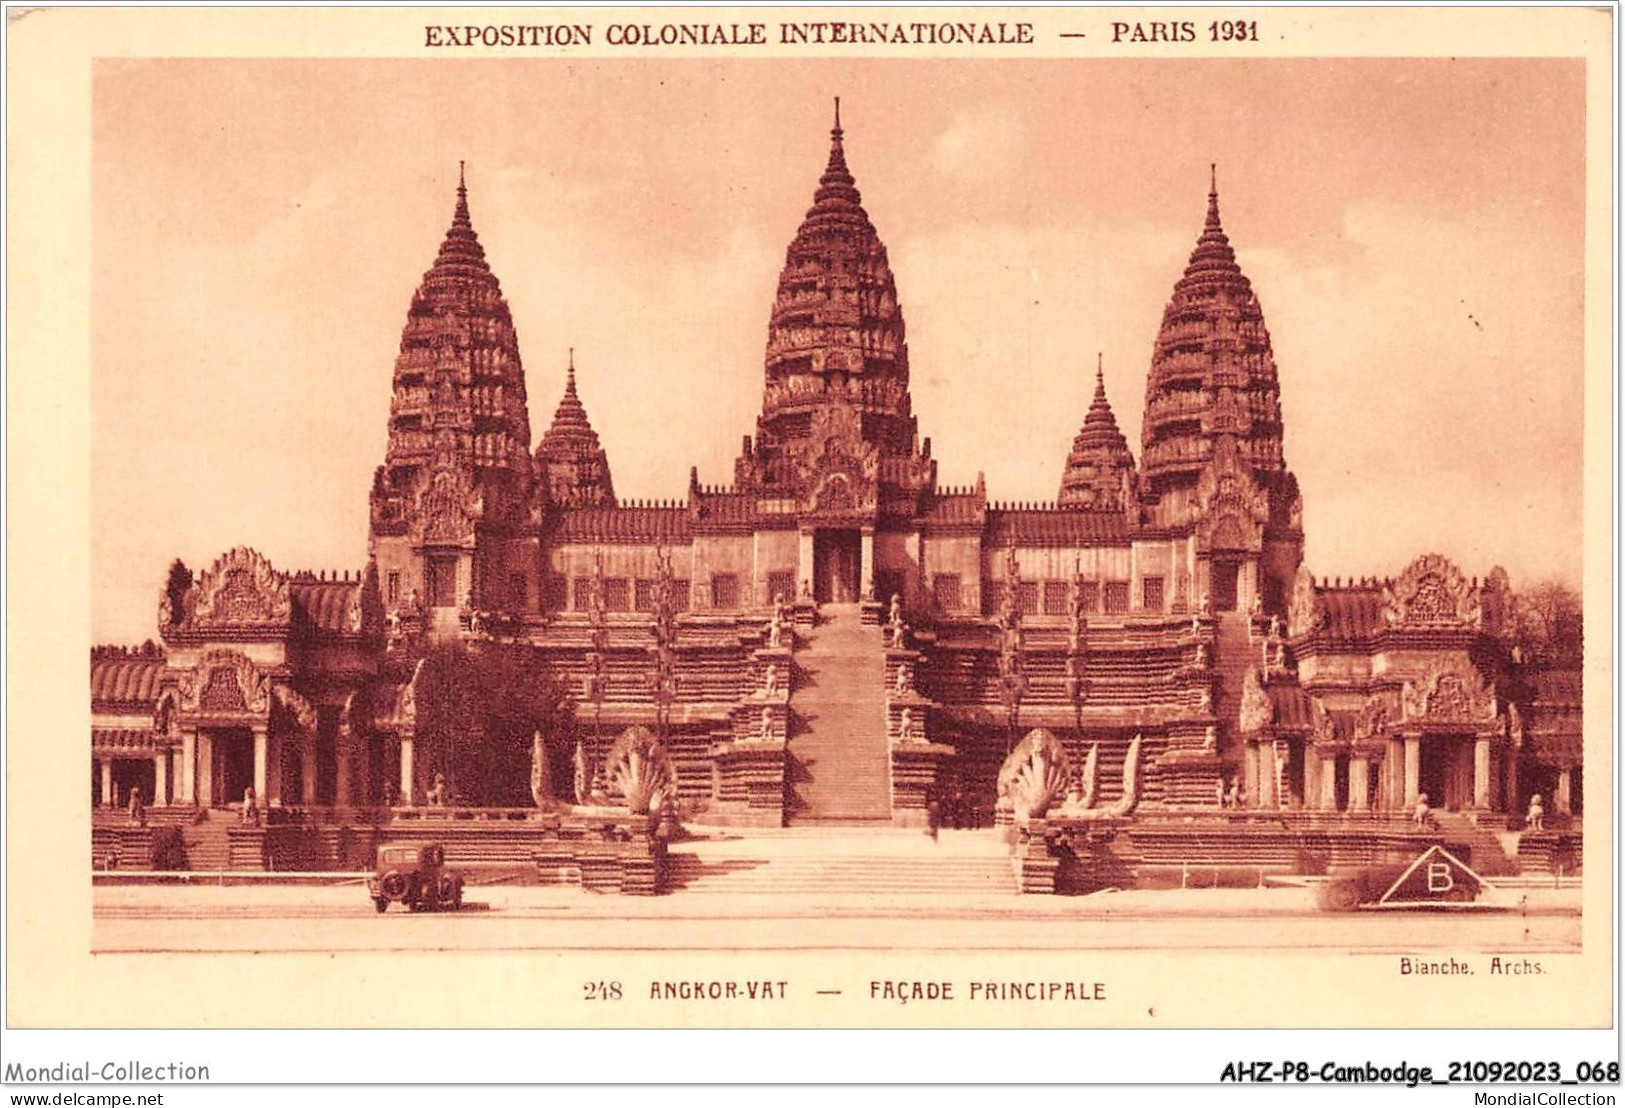 AHZP8-CAMBODGE-0717 - EXPOSITION COLONIALE INTERNATIONALE - PARIS 1931 - ANGKOR-VAT - FACADE PRINCIPALE - Cambodia